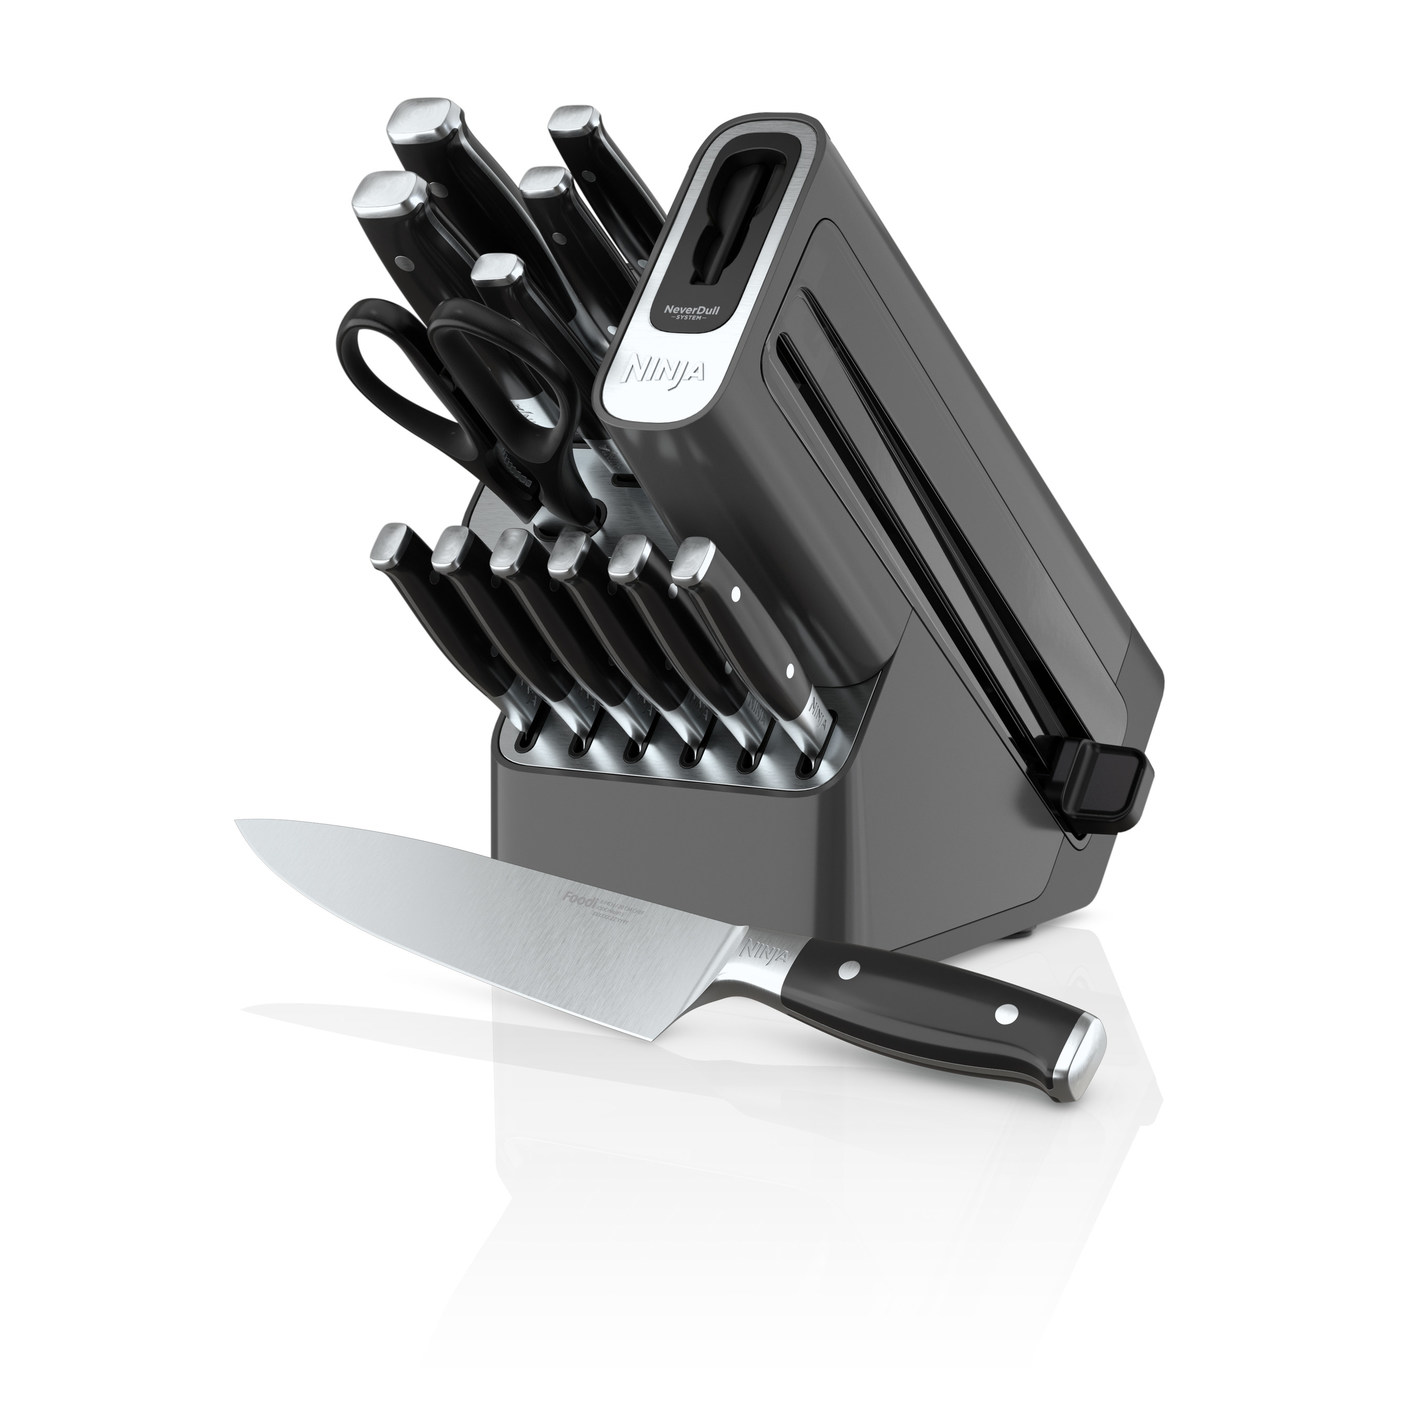 Cutlery  How to Sharpen (Ninja™ Foodi™ NeverDull™ Knife System